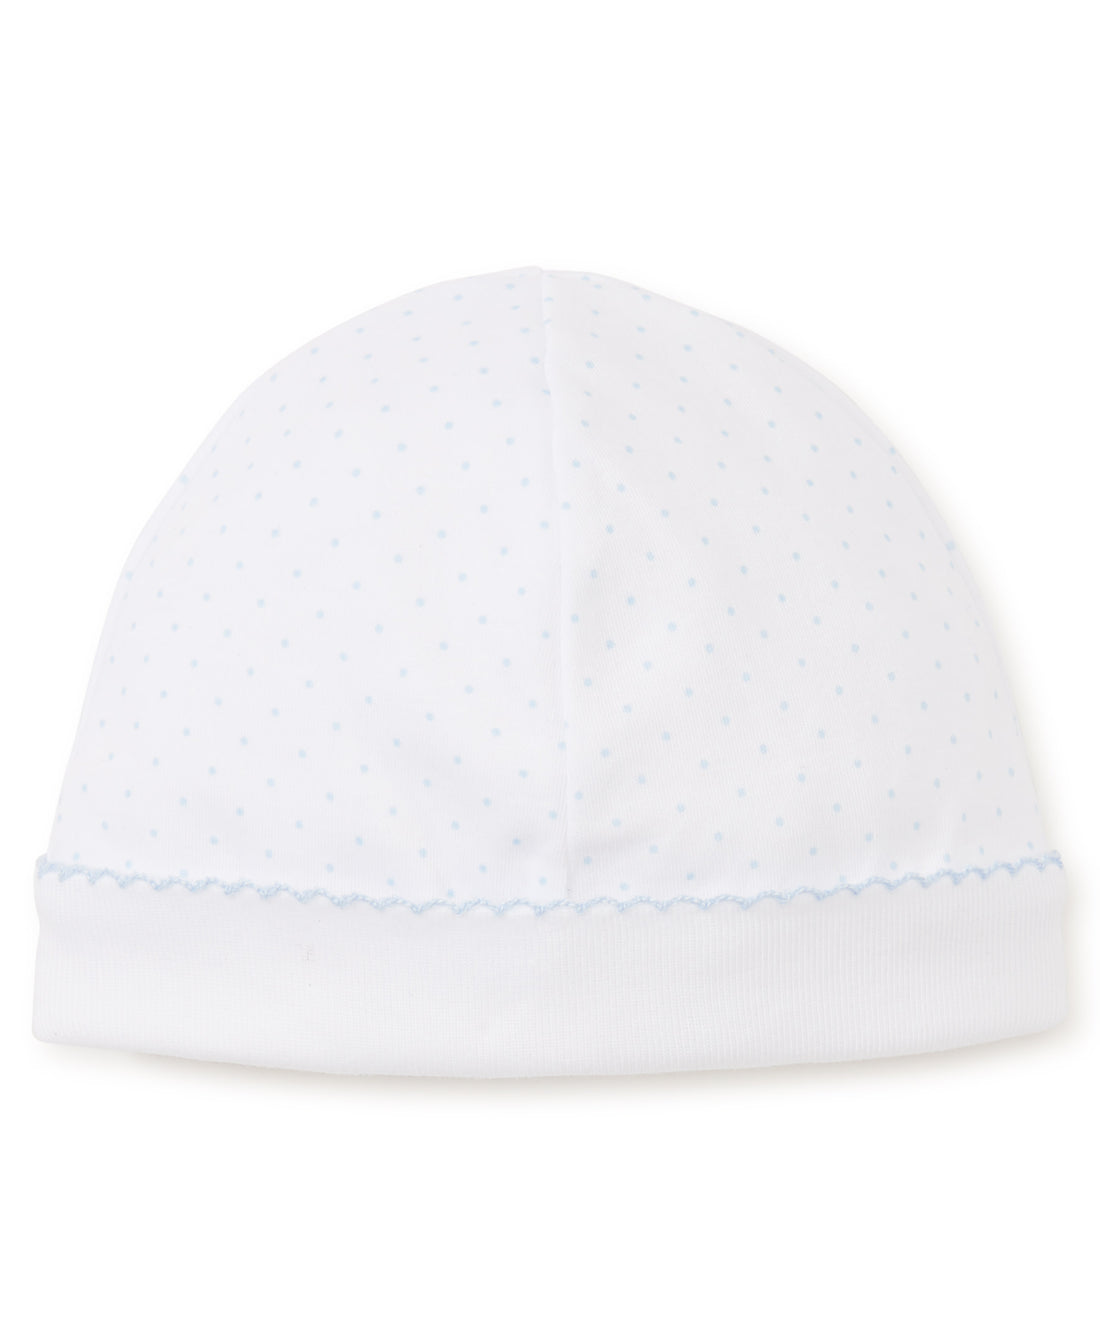 dots print hat white light blue